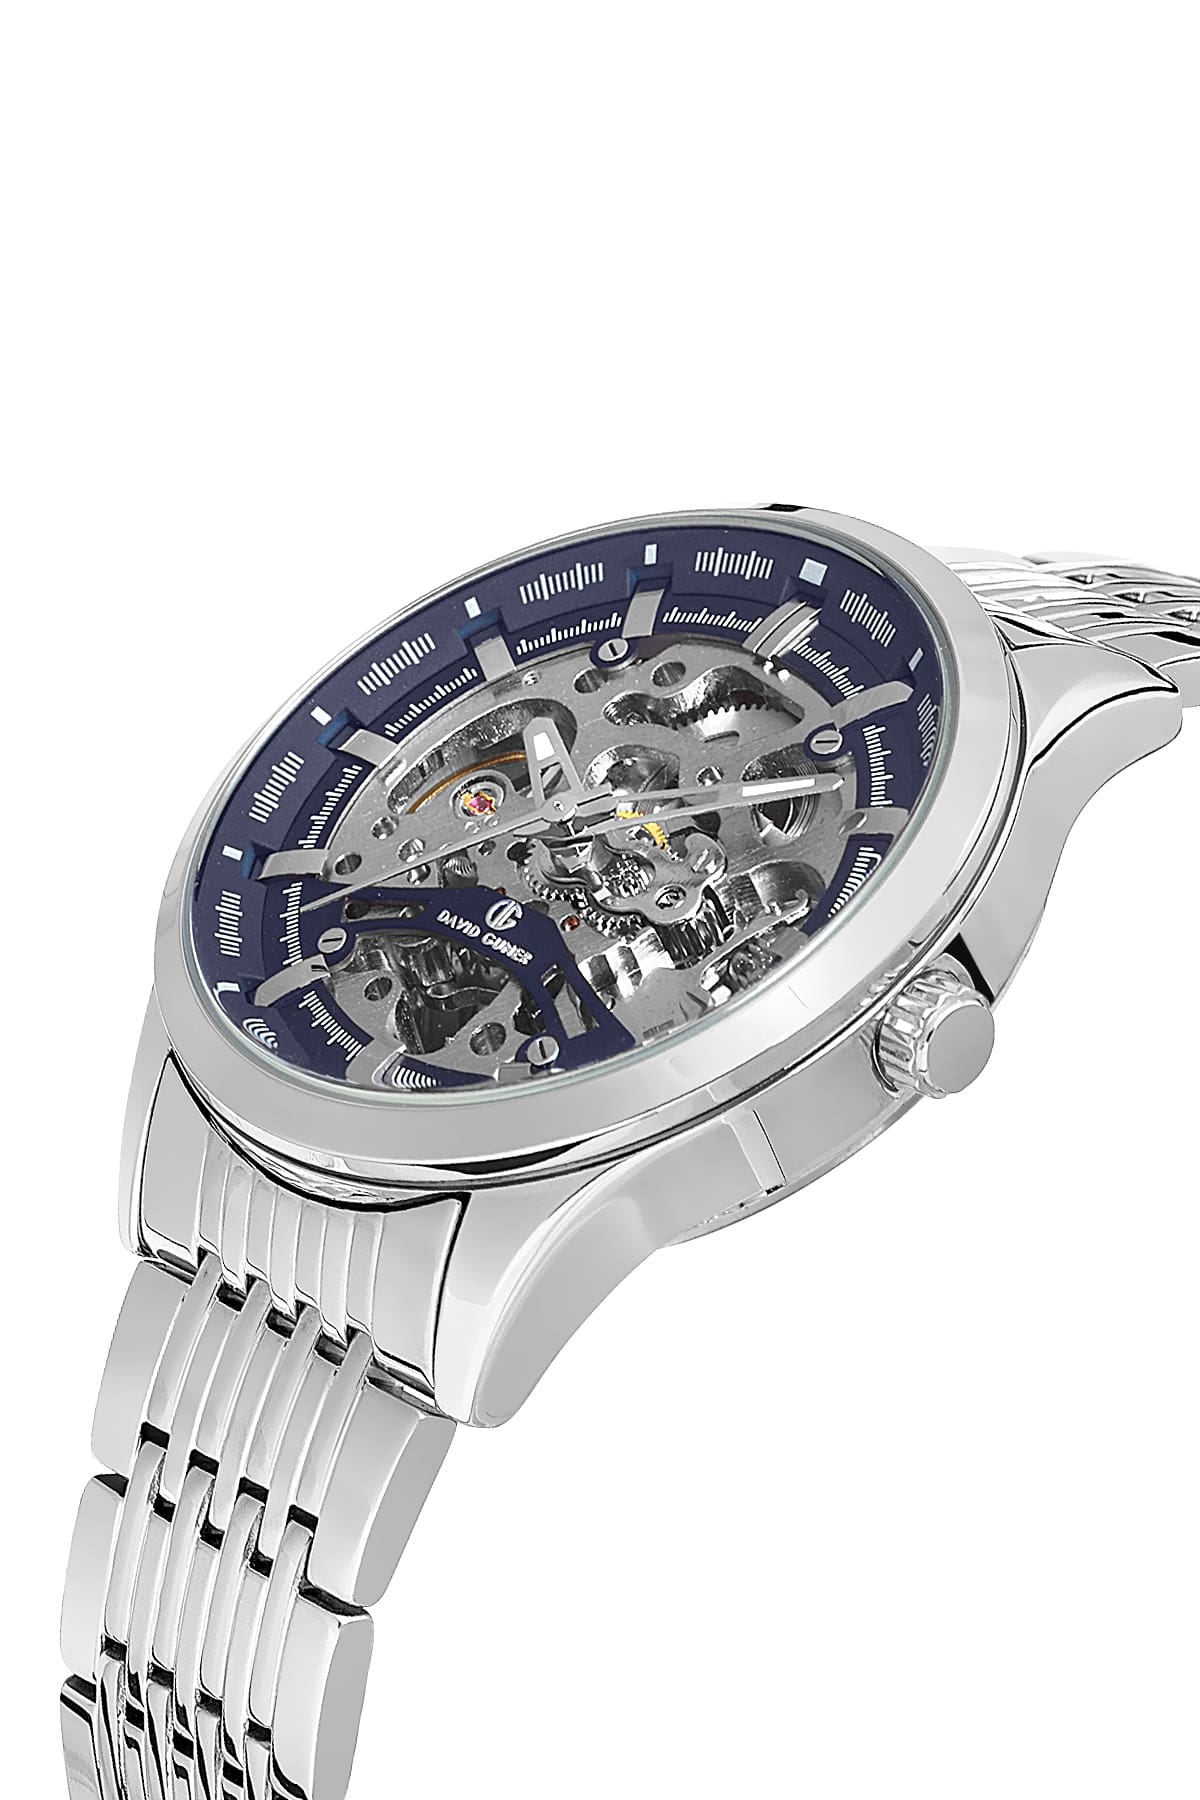 DAVID GUNER Dark Blue Dial Silver Plated Automatic Function Men's Wristwatch